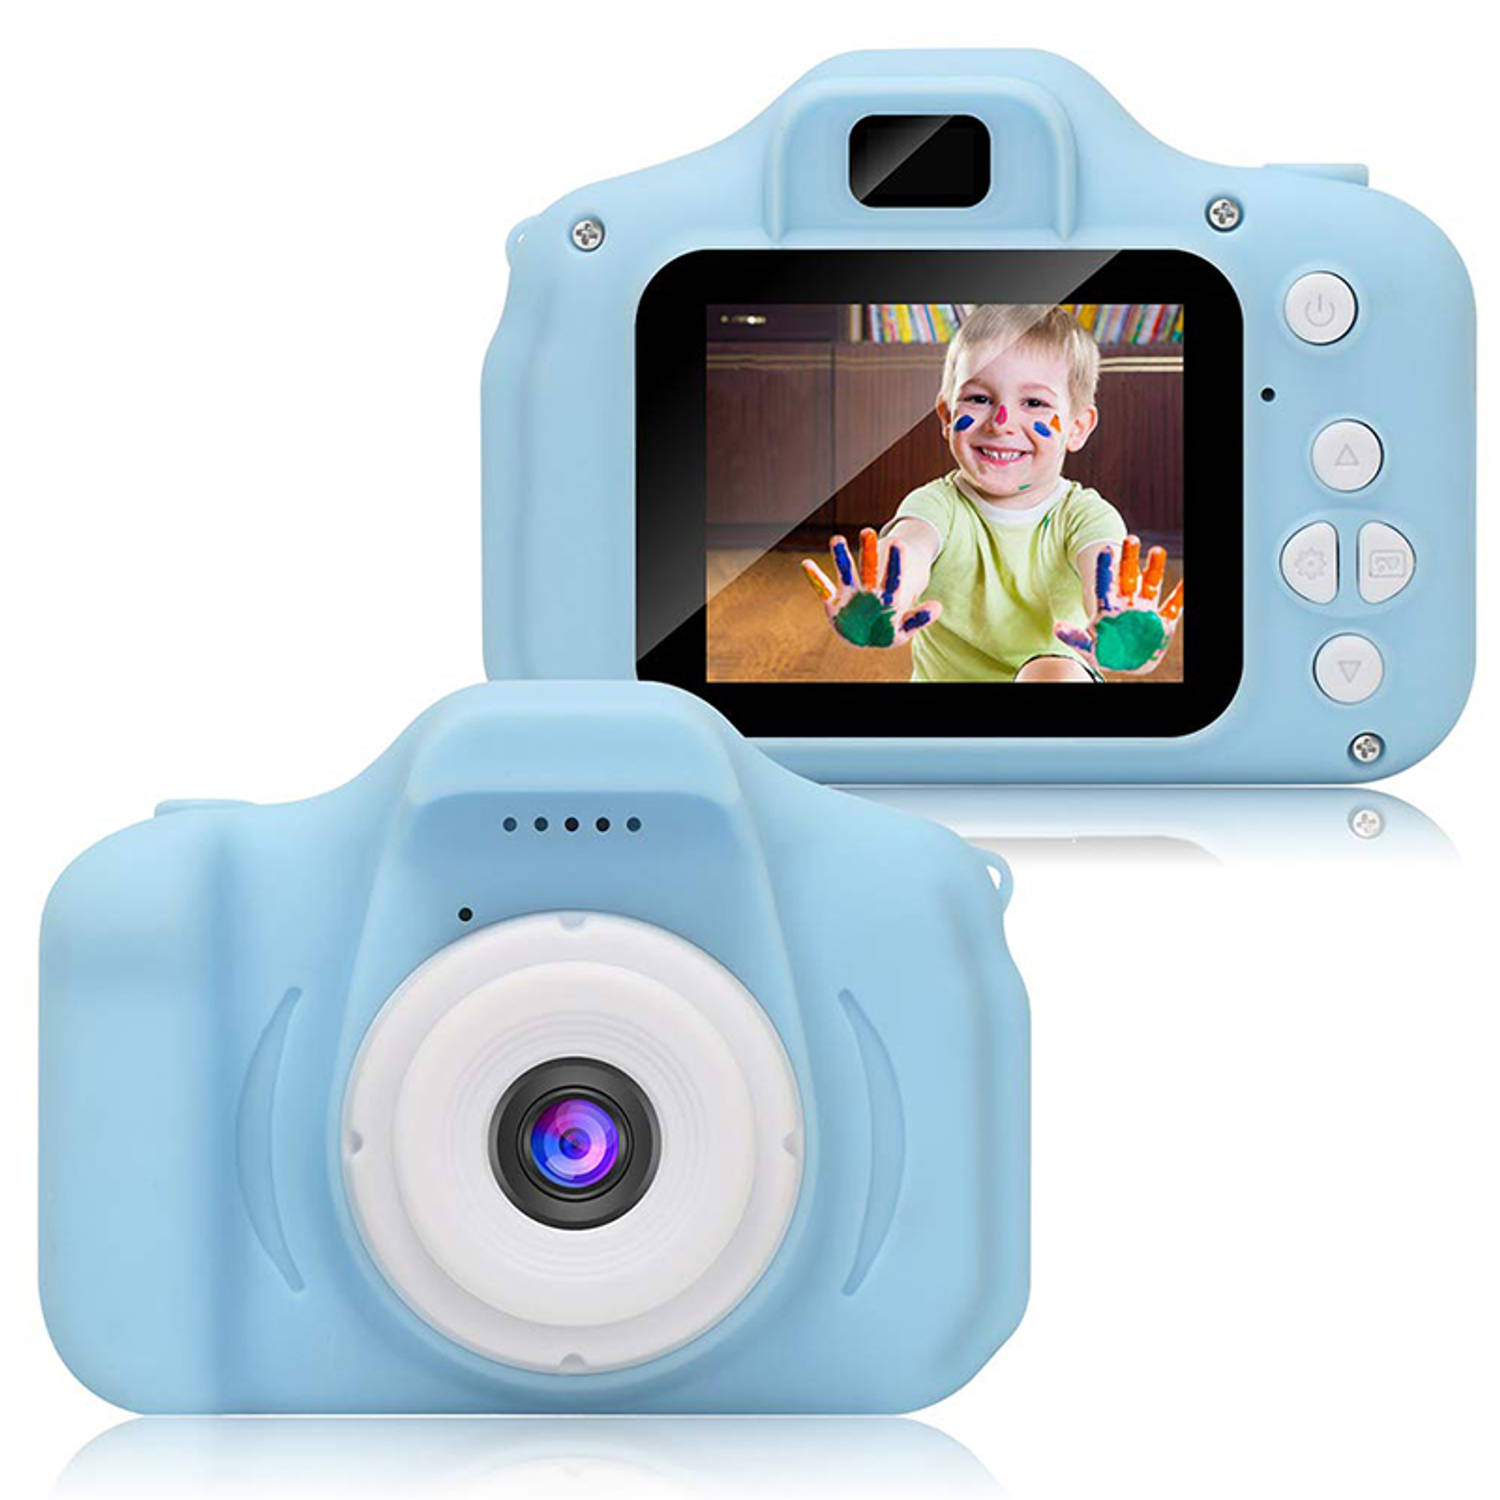 Denver Kca-1330 Digitale Kindercamera Full Hd Foto En Video 3 Spelletjes Blauw